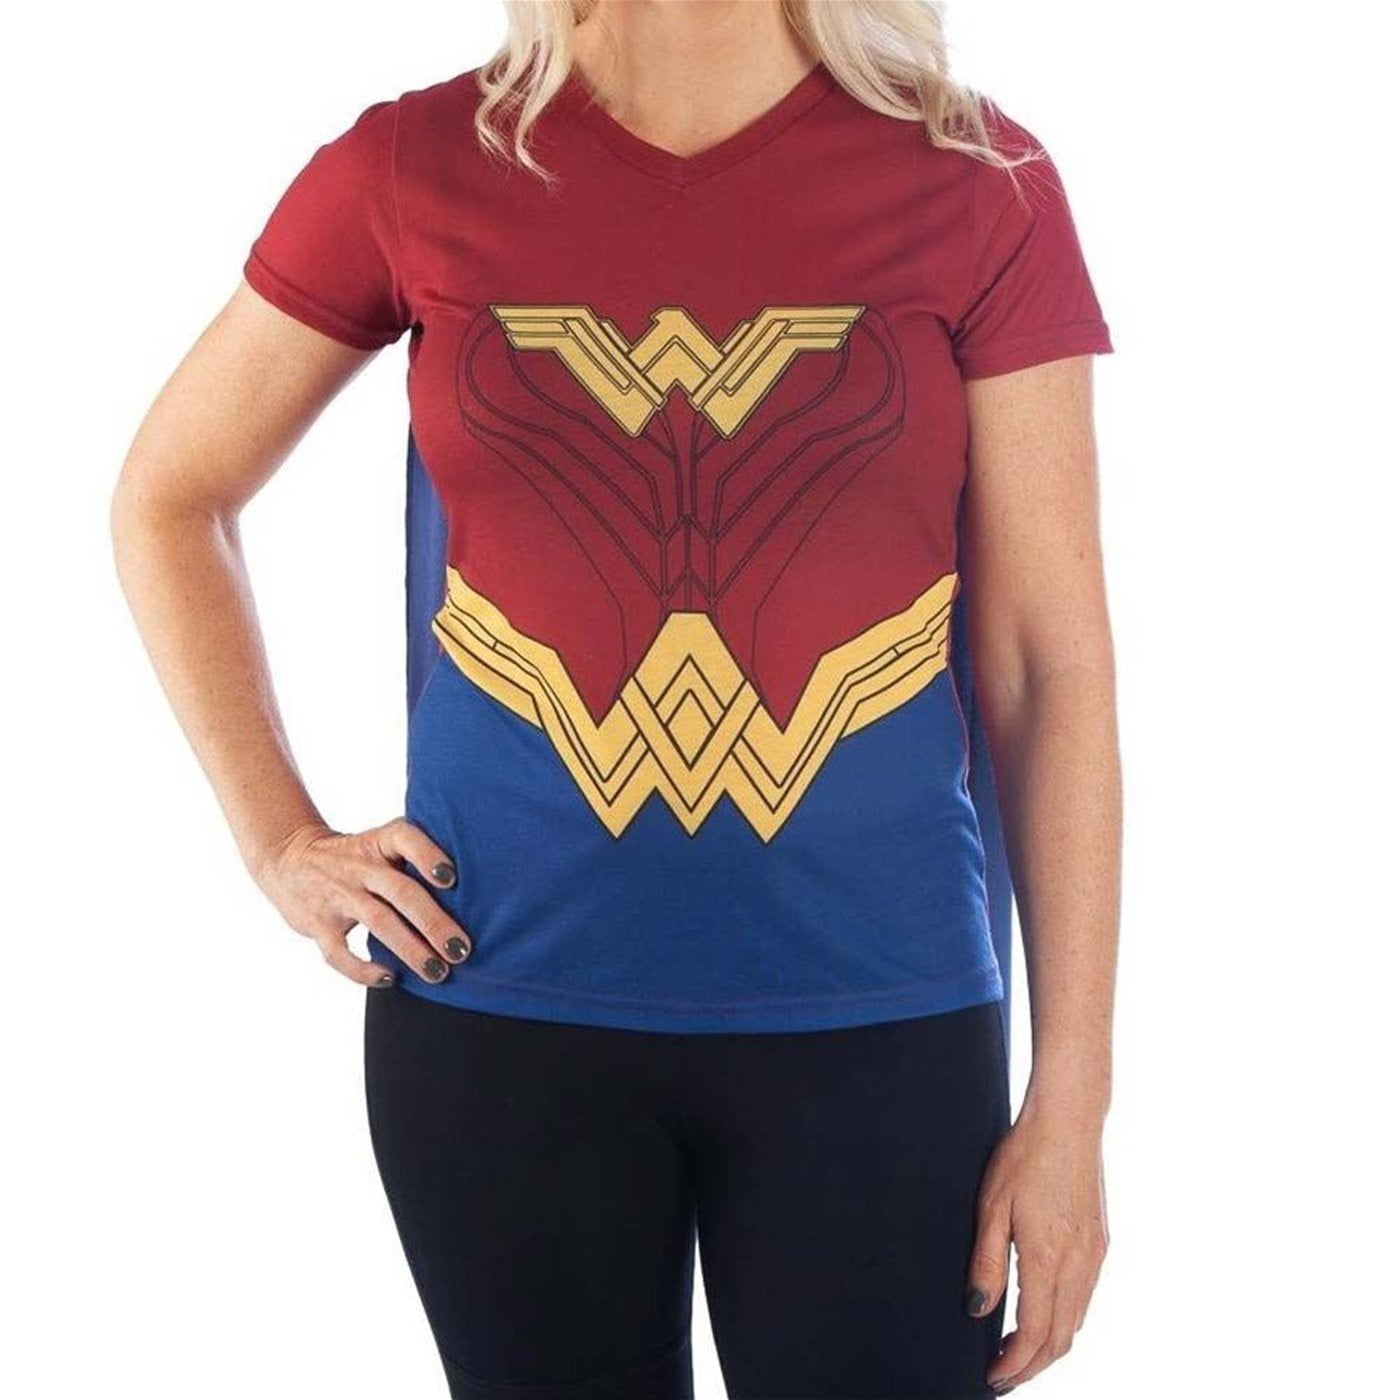 DC Comics Wonder Woman Women's Plus Size Costume T-Shirt Red Gold 